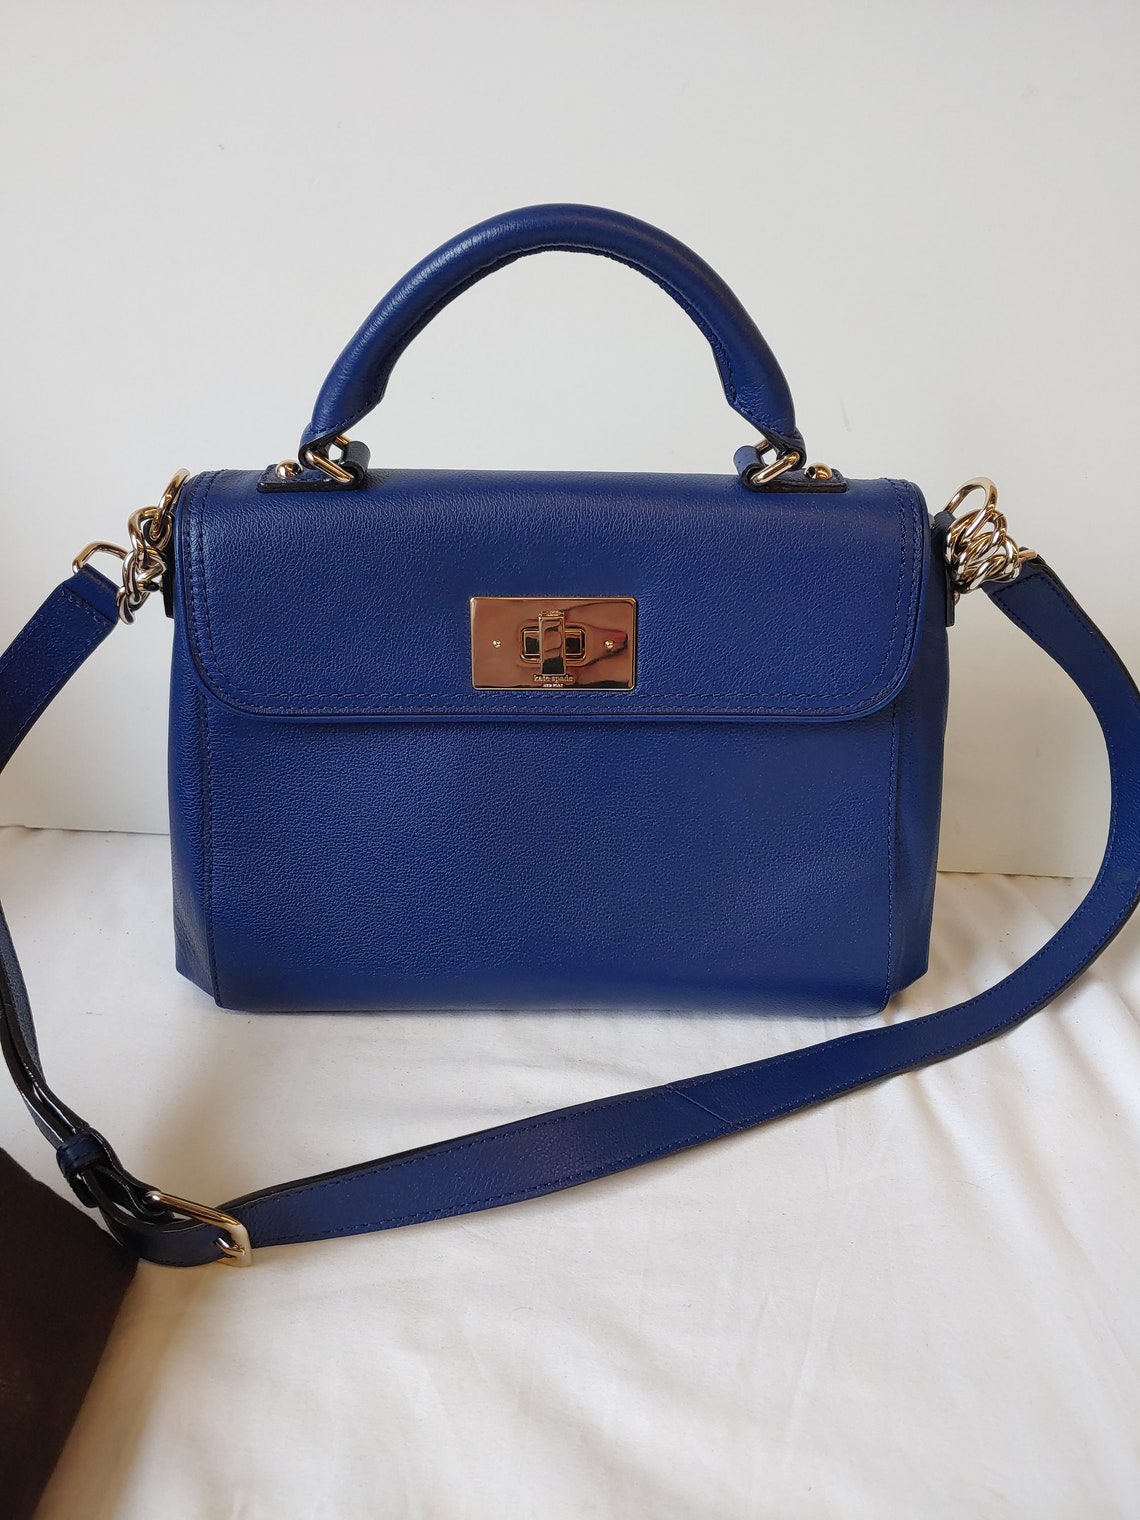 Gorgeous Kate Spade NY Cobalt Blue Handbag Purse | Etsy